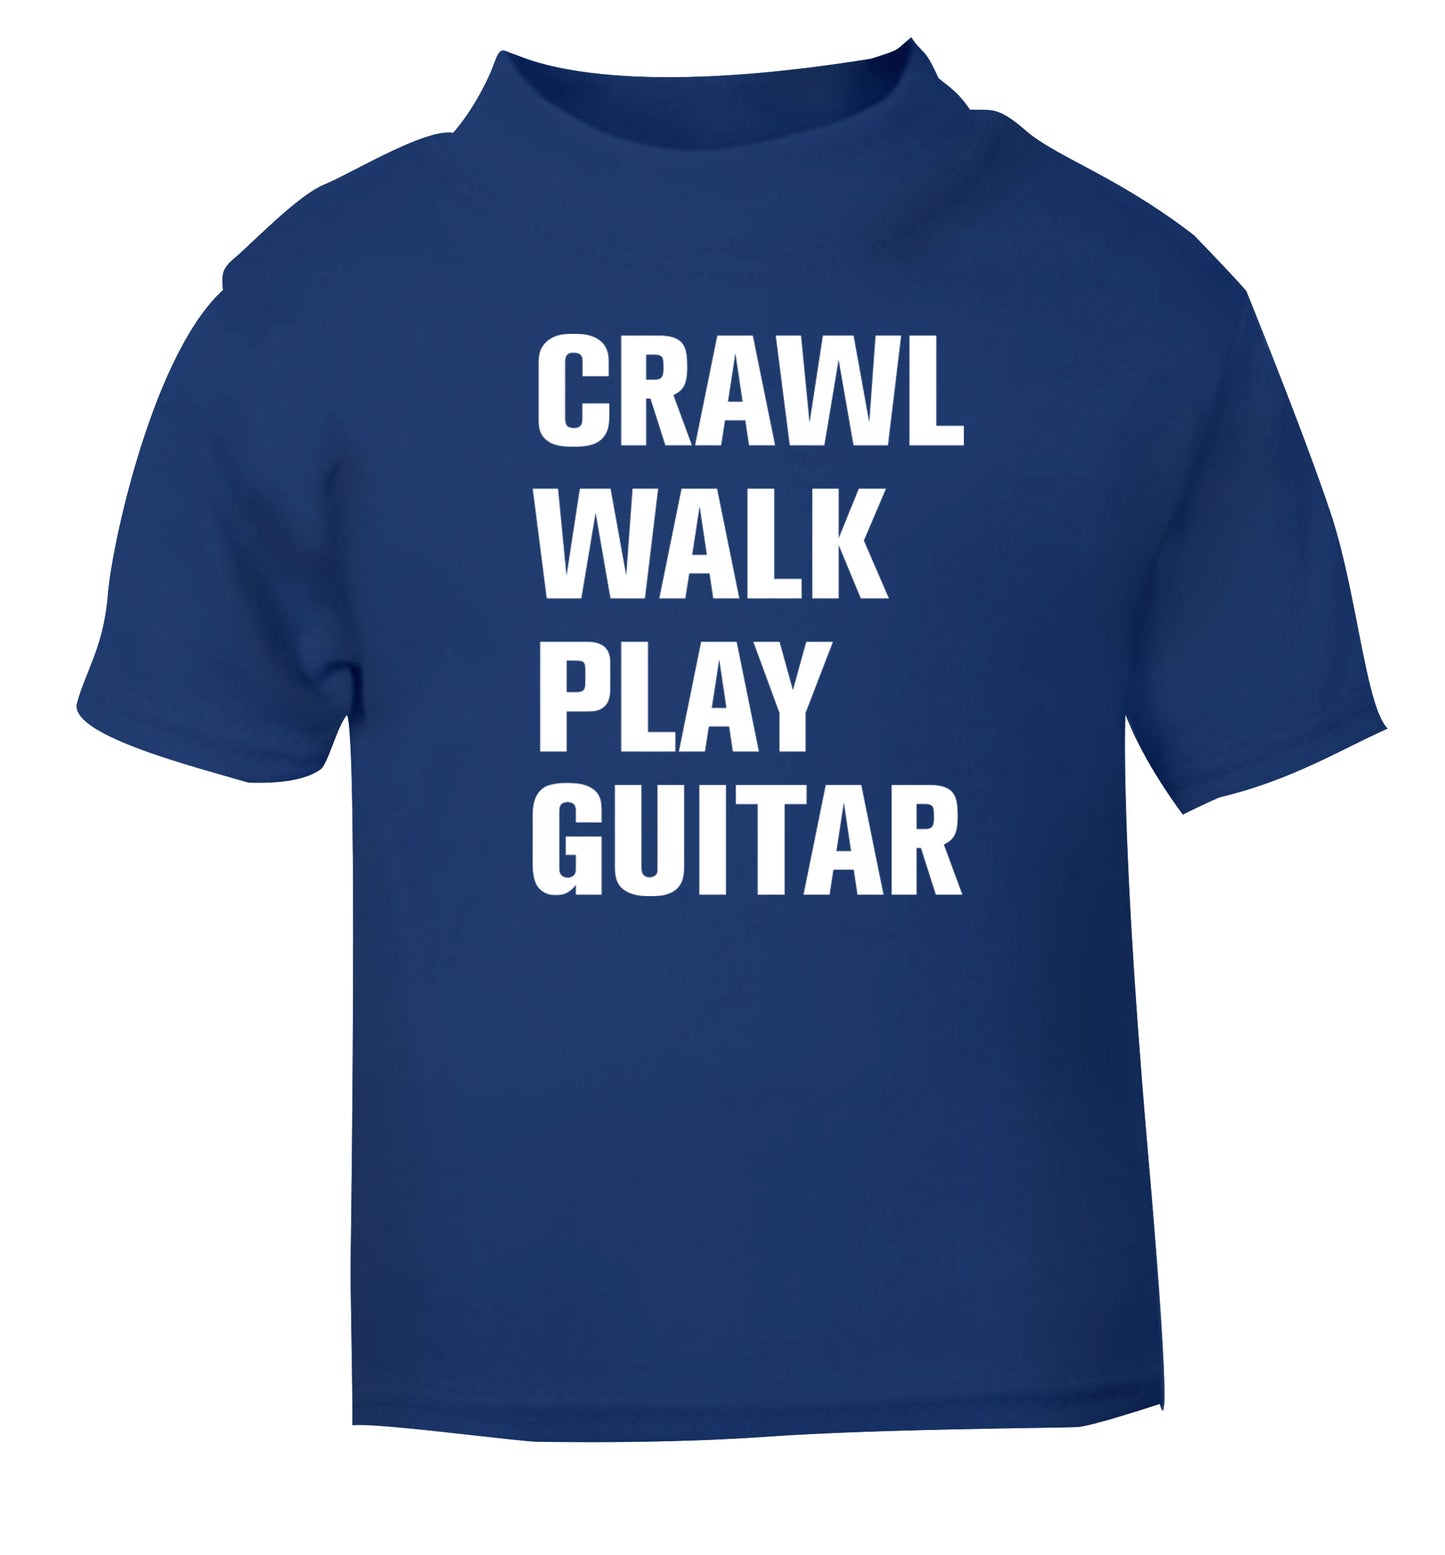 Crawl walk play guitar blue Baby Toddler Tshirt 2 Years